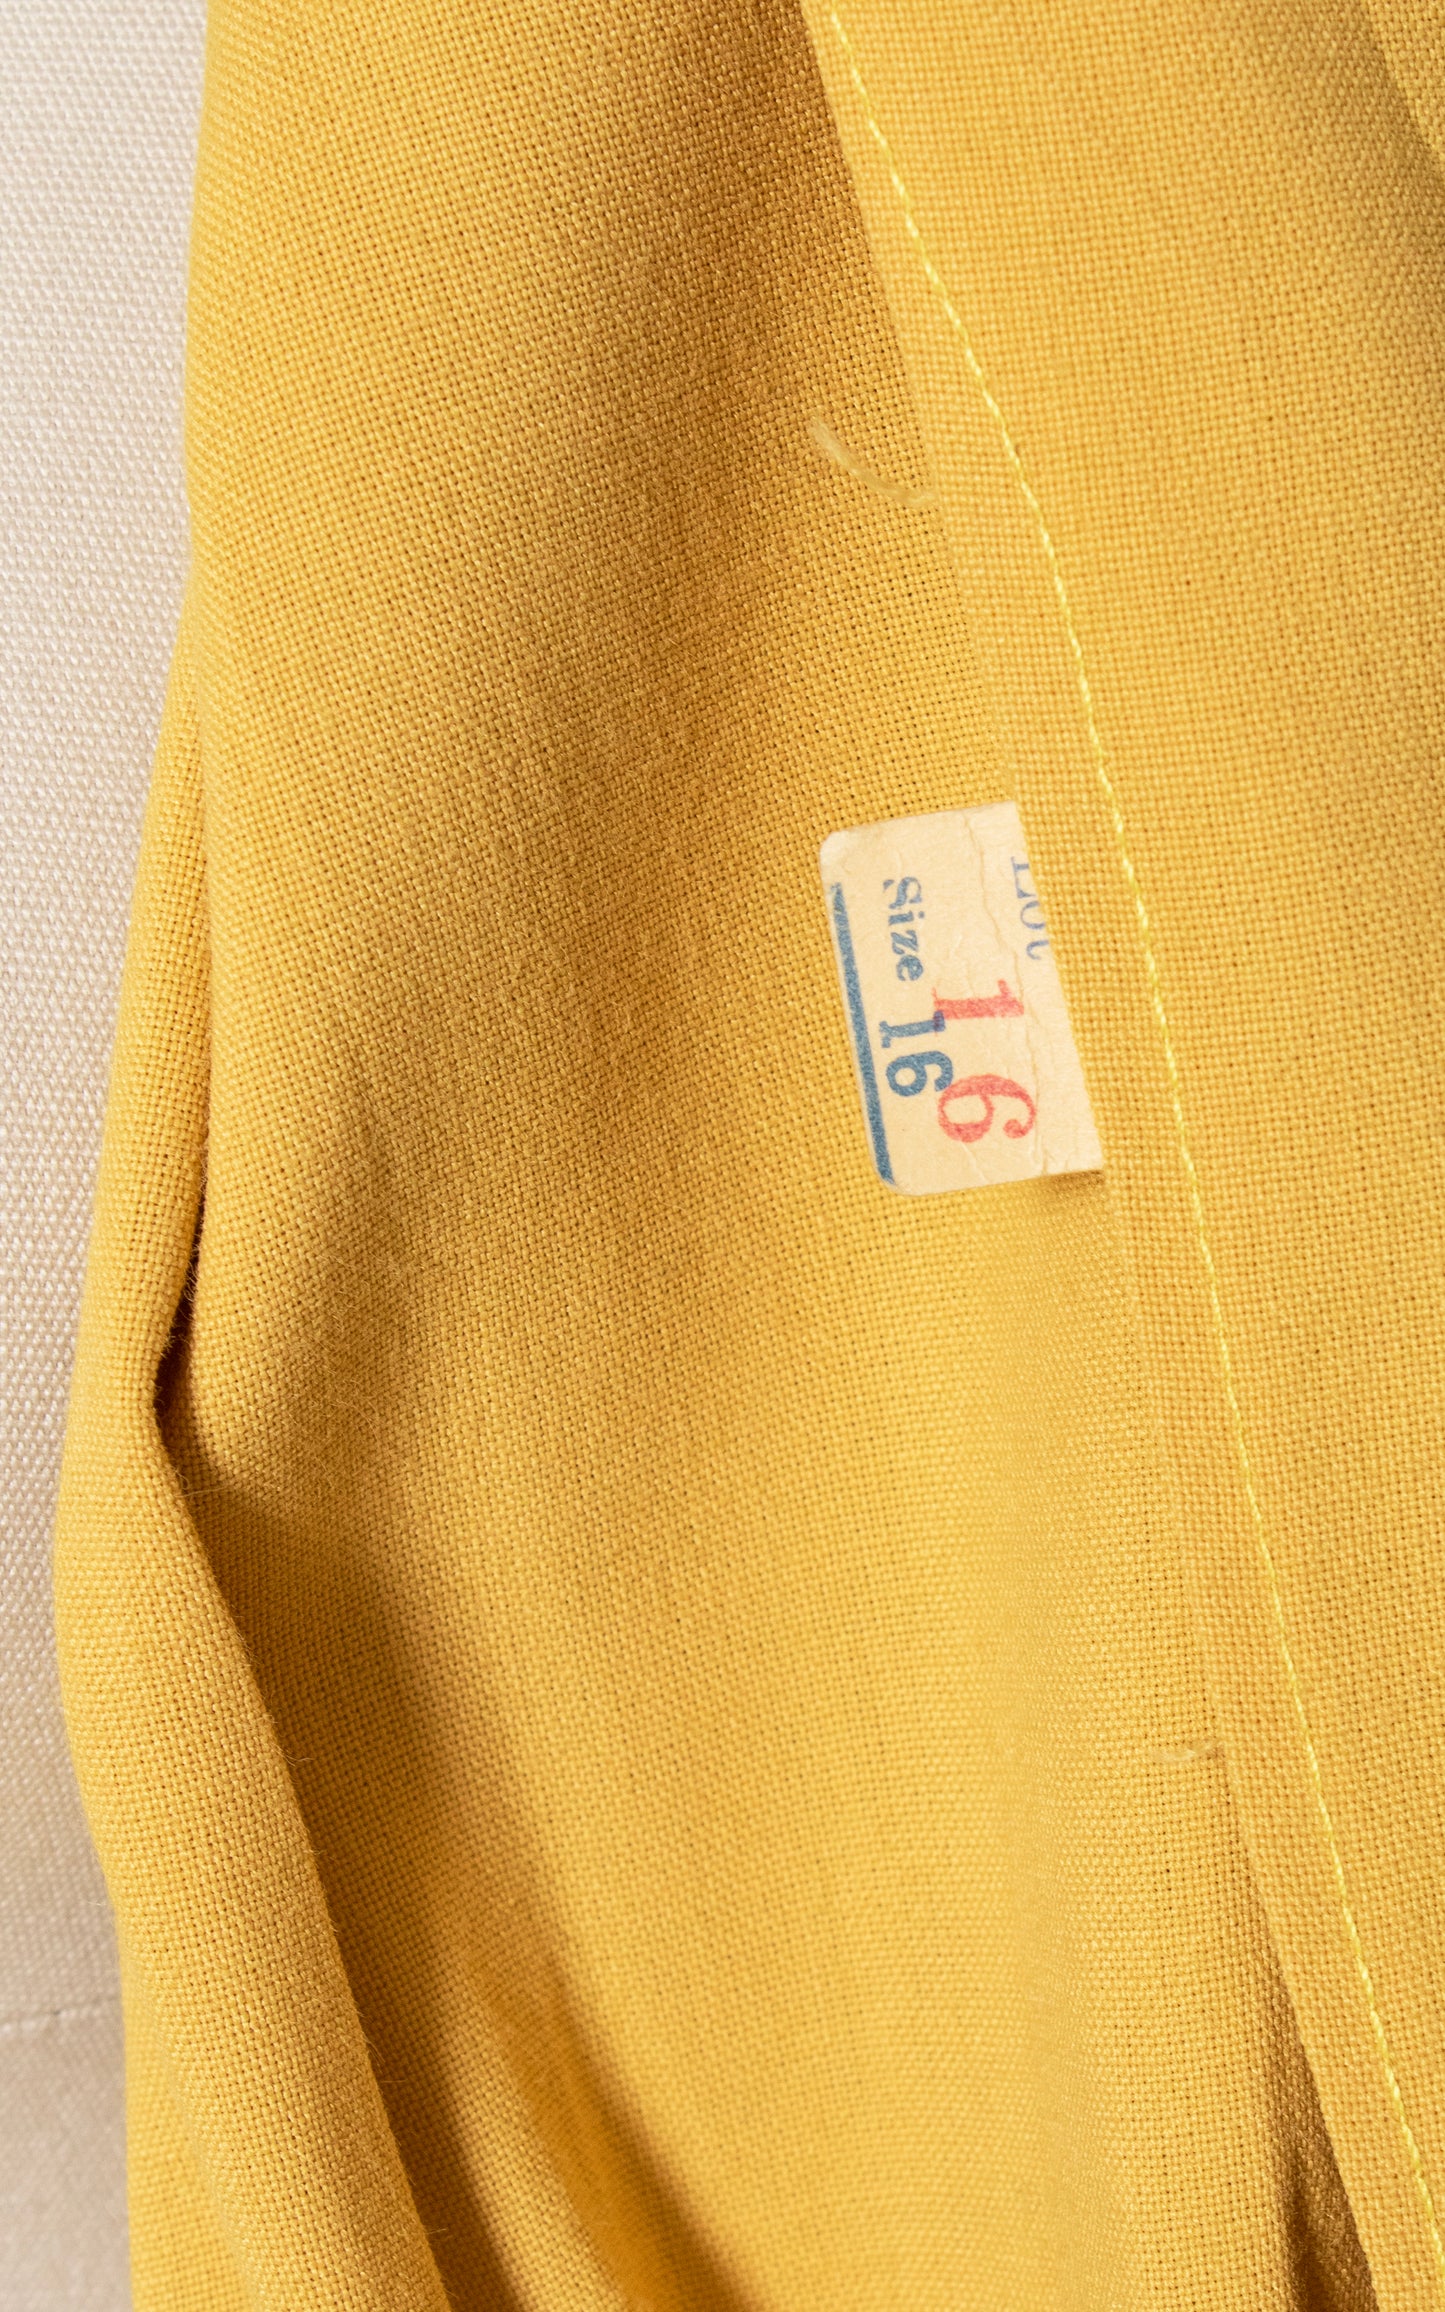 1940s Soutache Bell Sleeve Blouse | small/medium